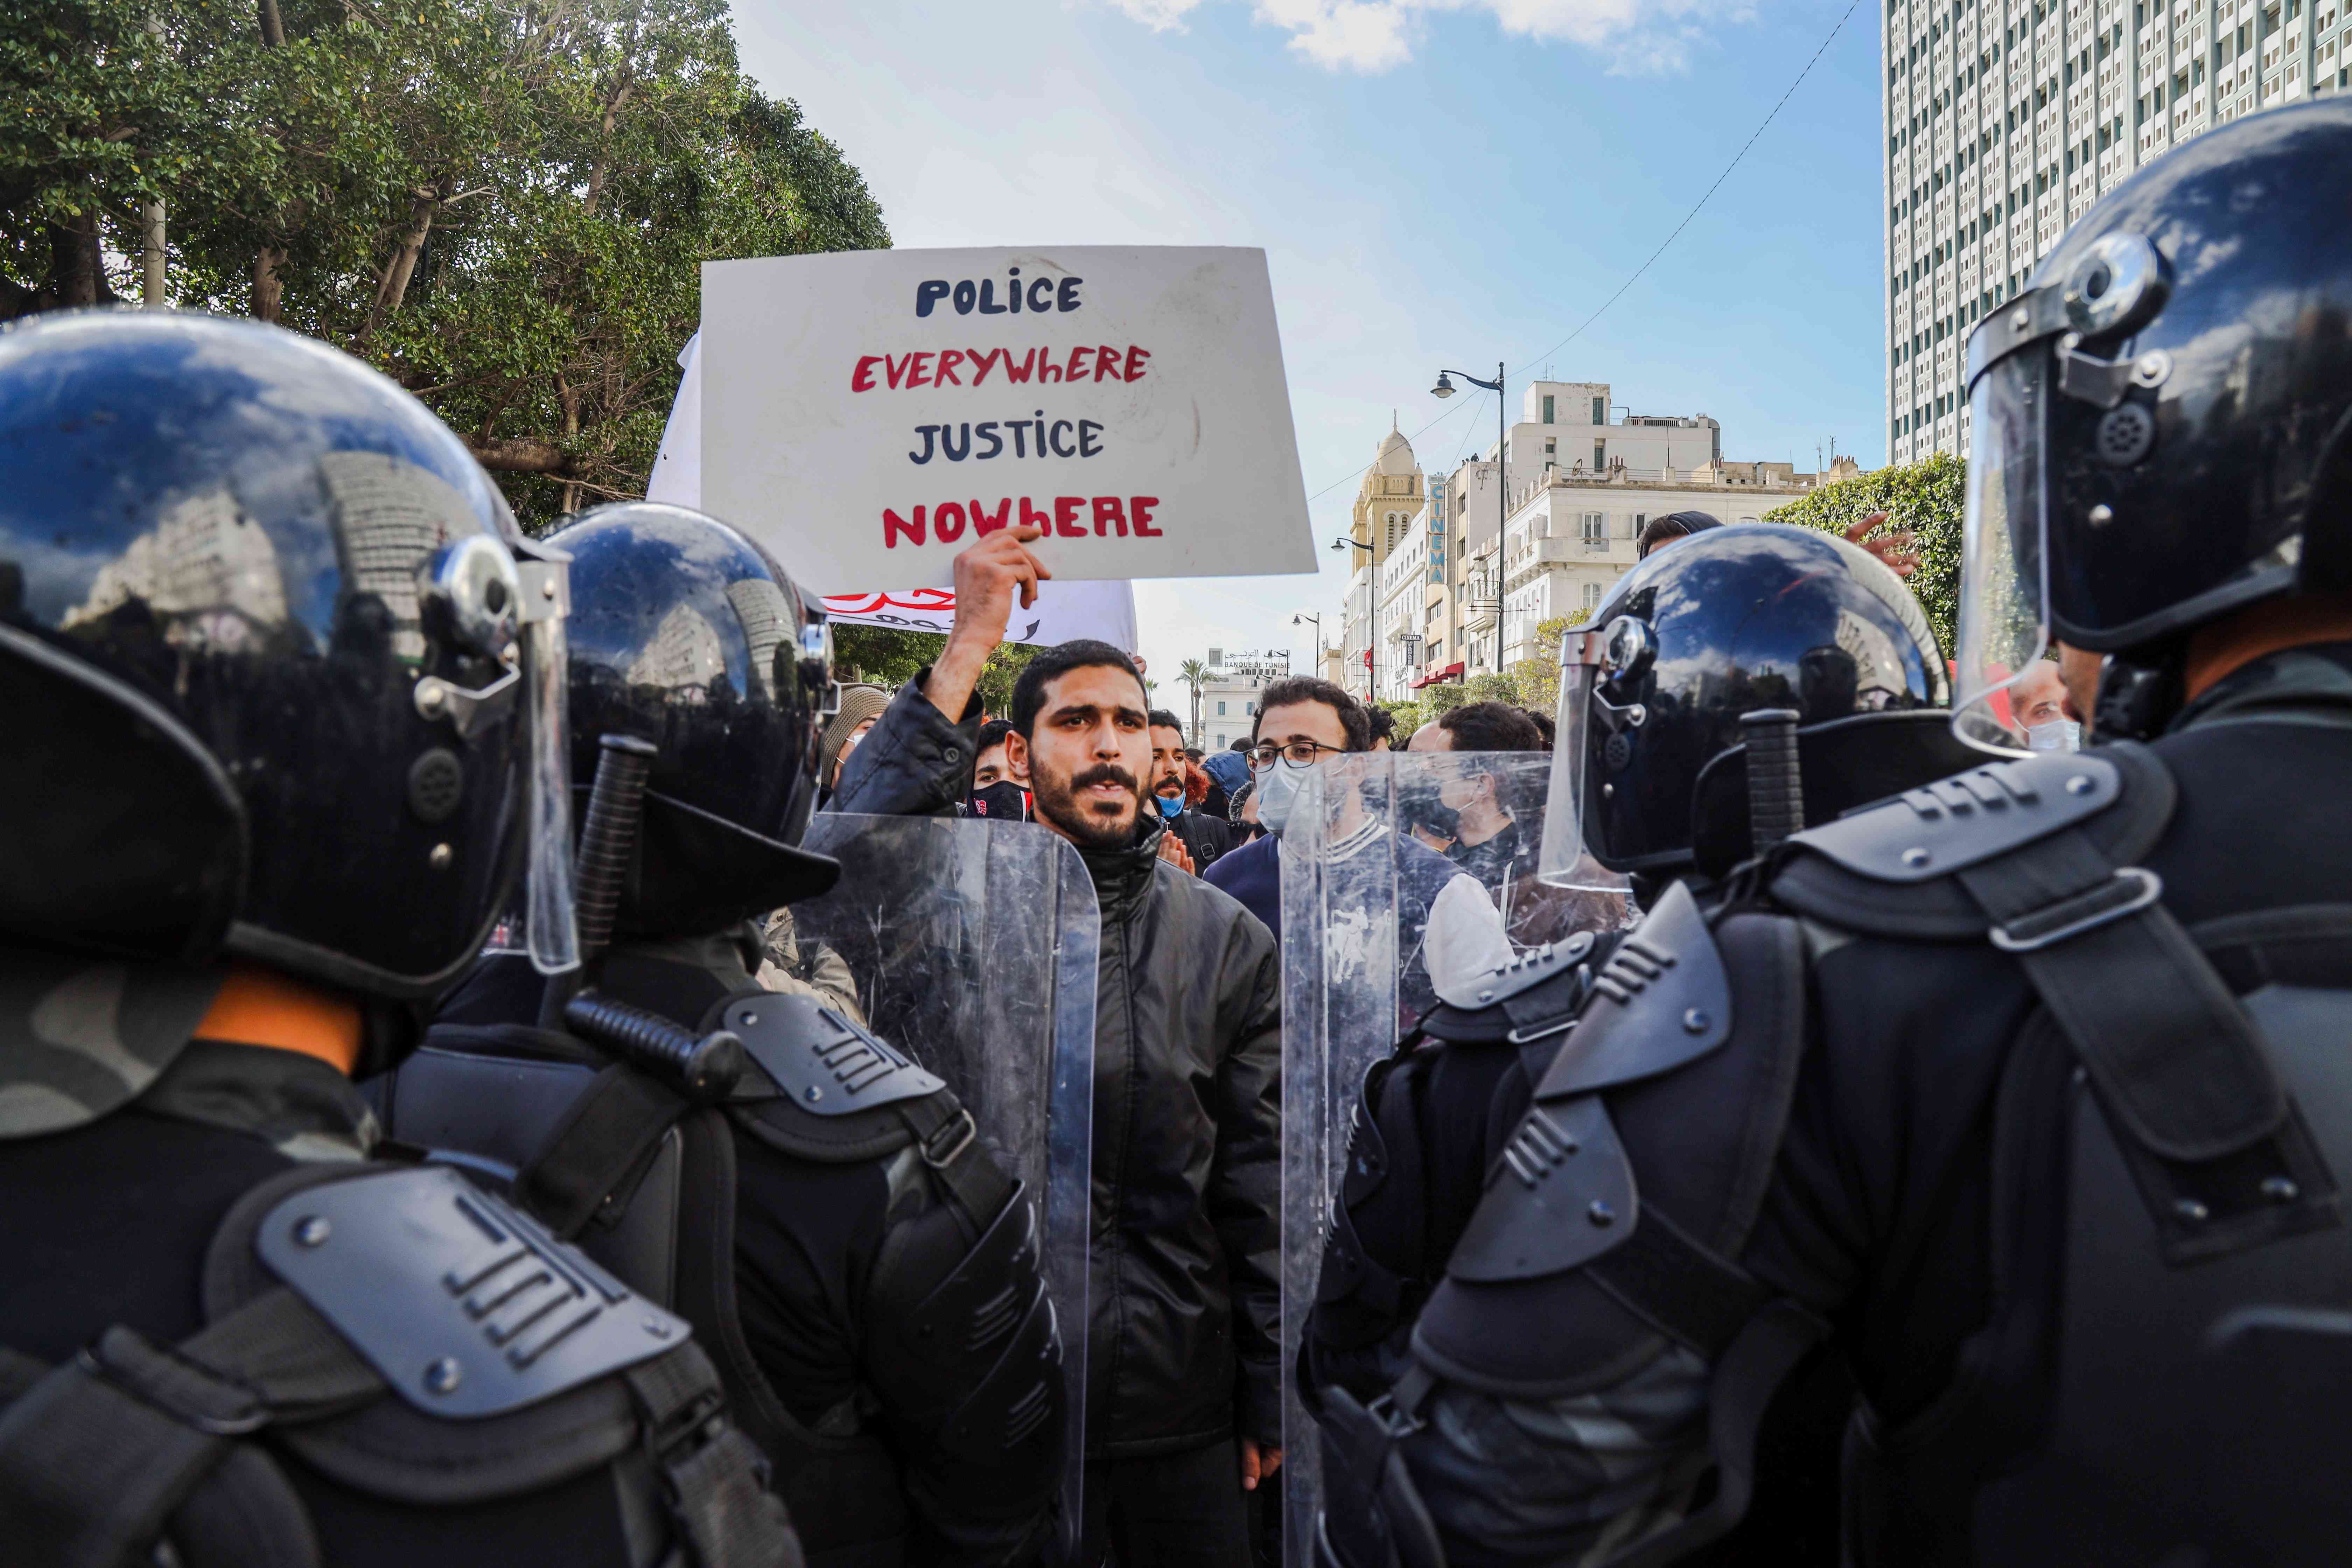 Tunisia: Police Use Violent Tactics to Quash Protests